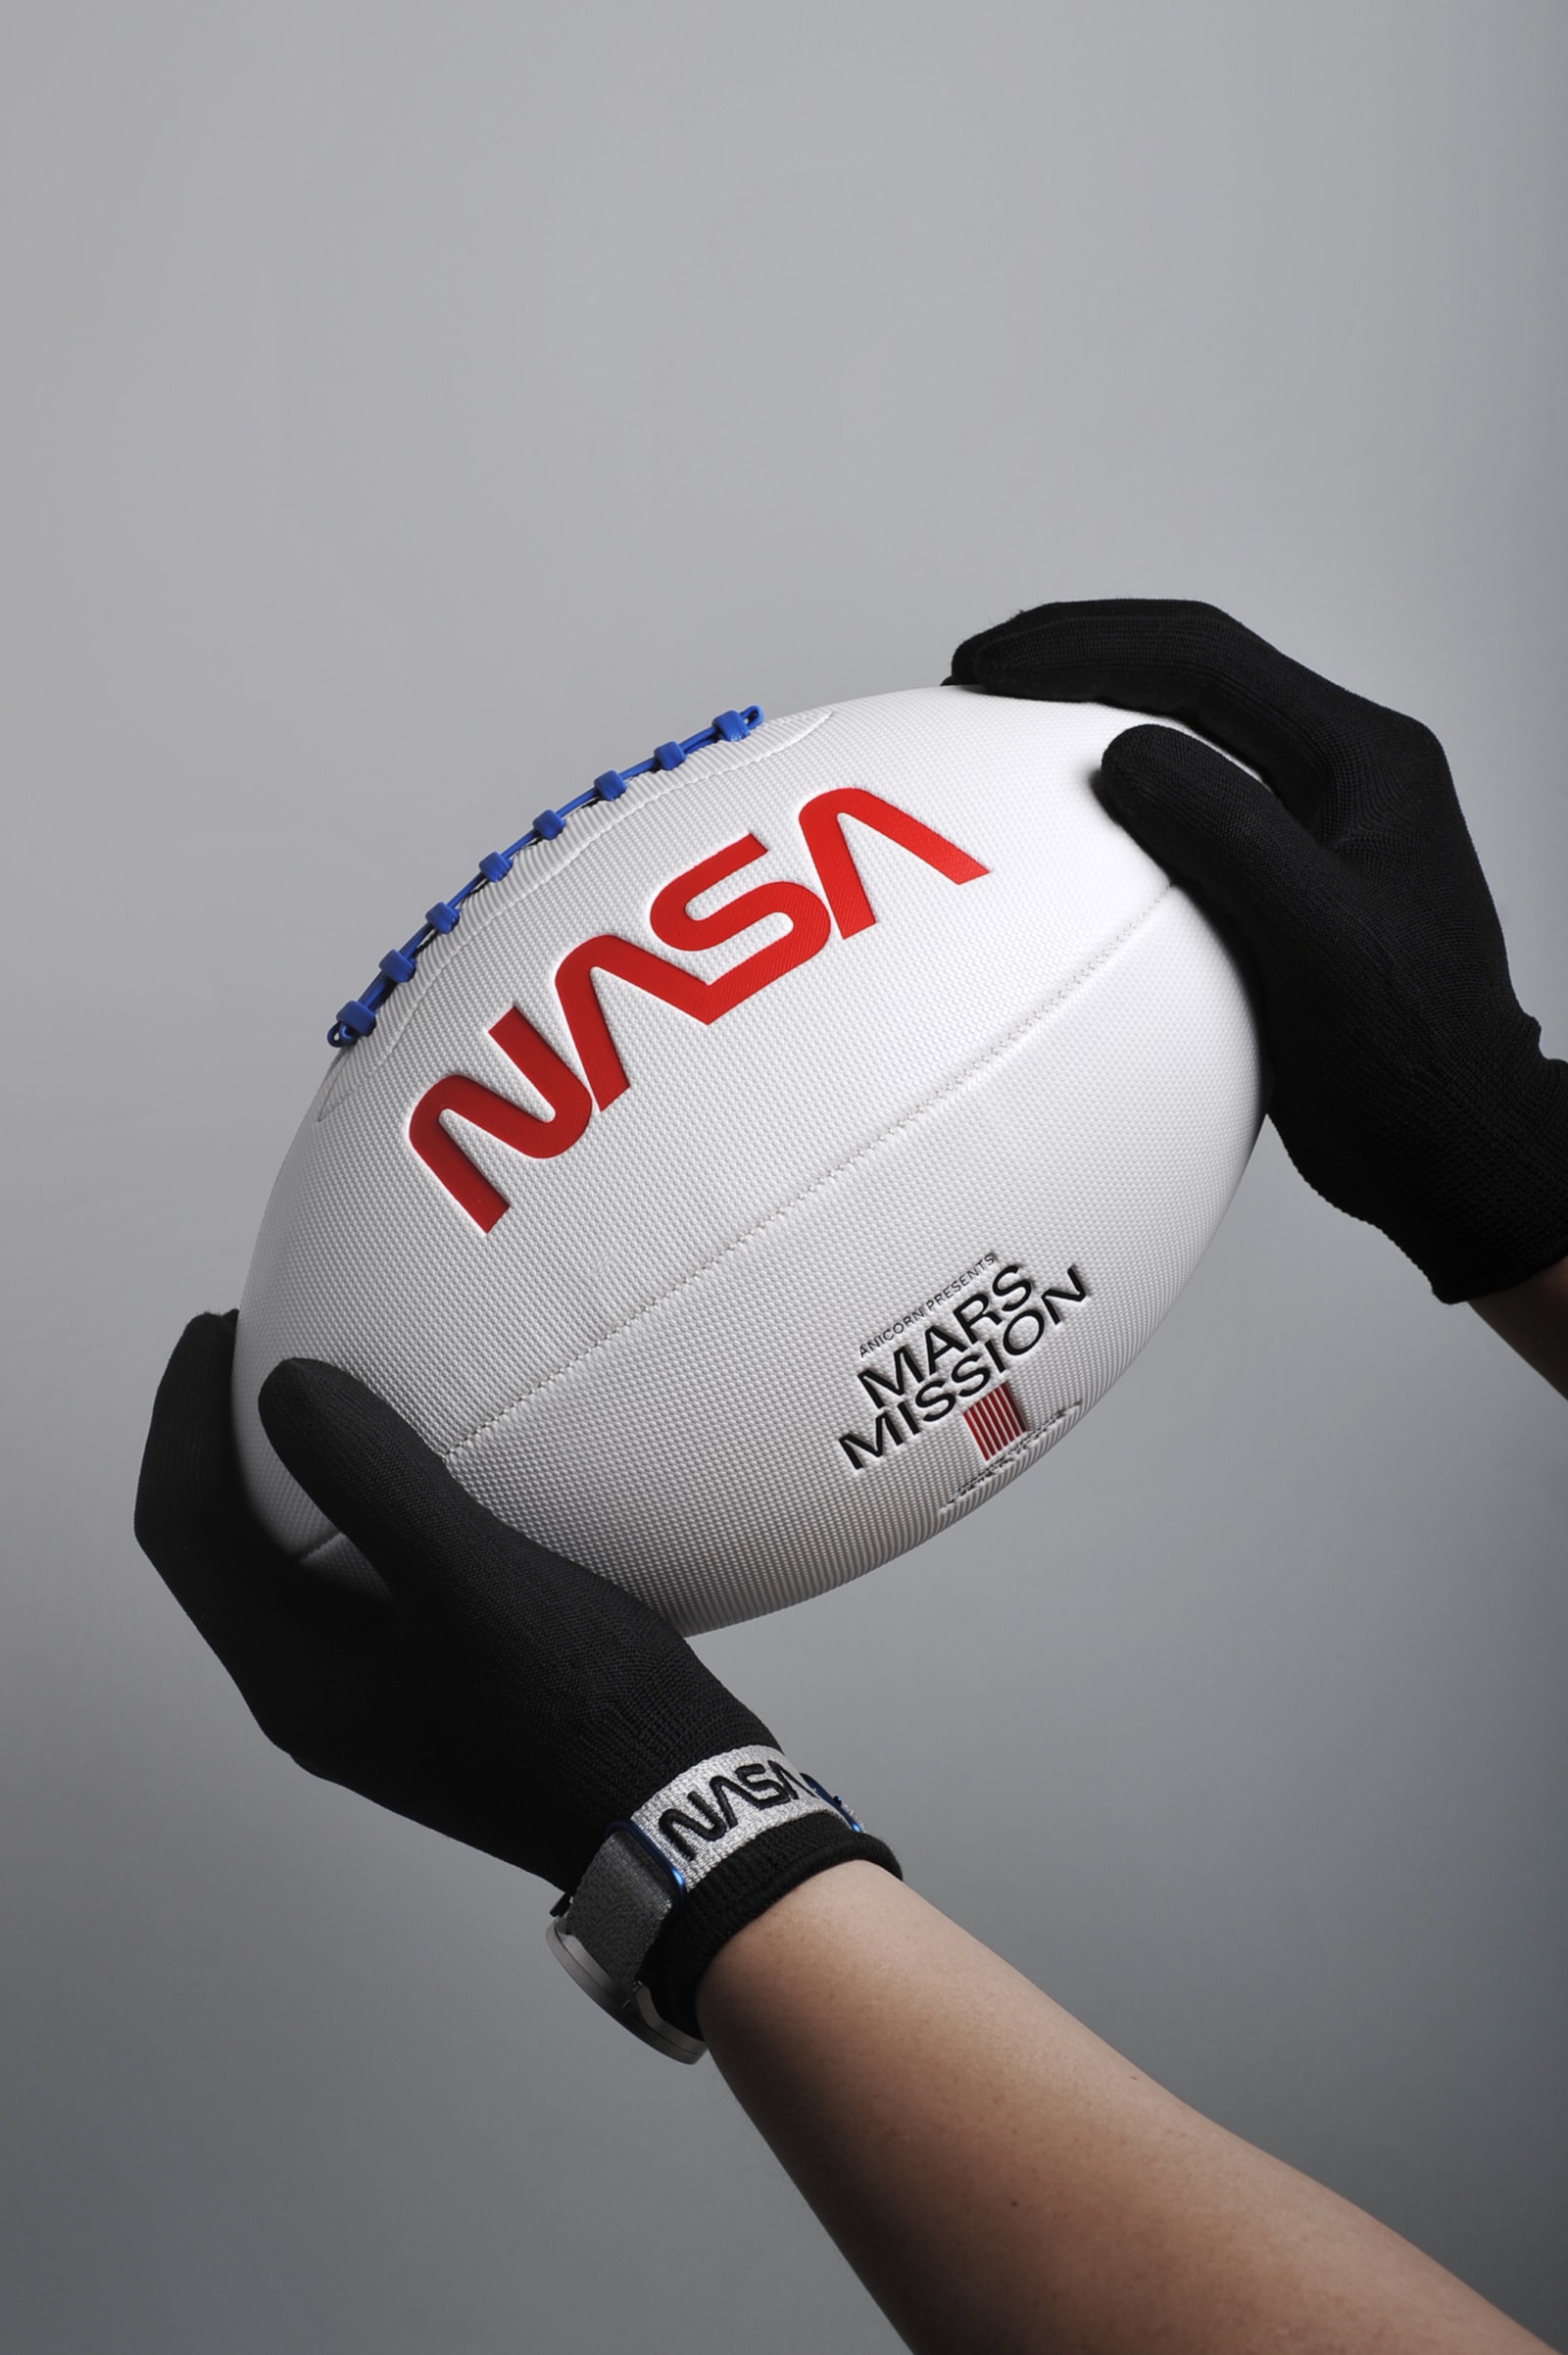 ANICORN x NASA 聯乘全新「MARS MISSION」限定系列